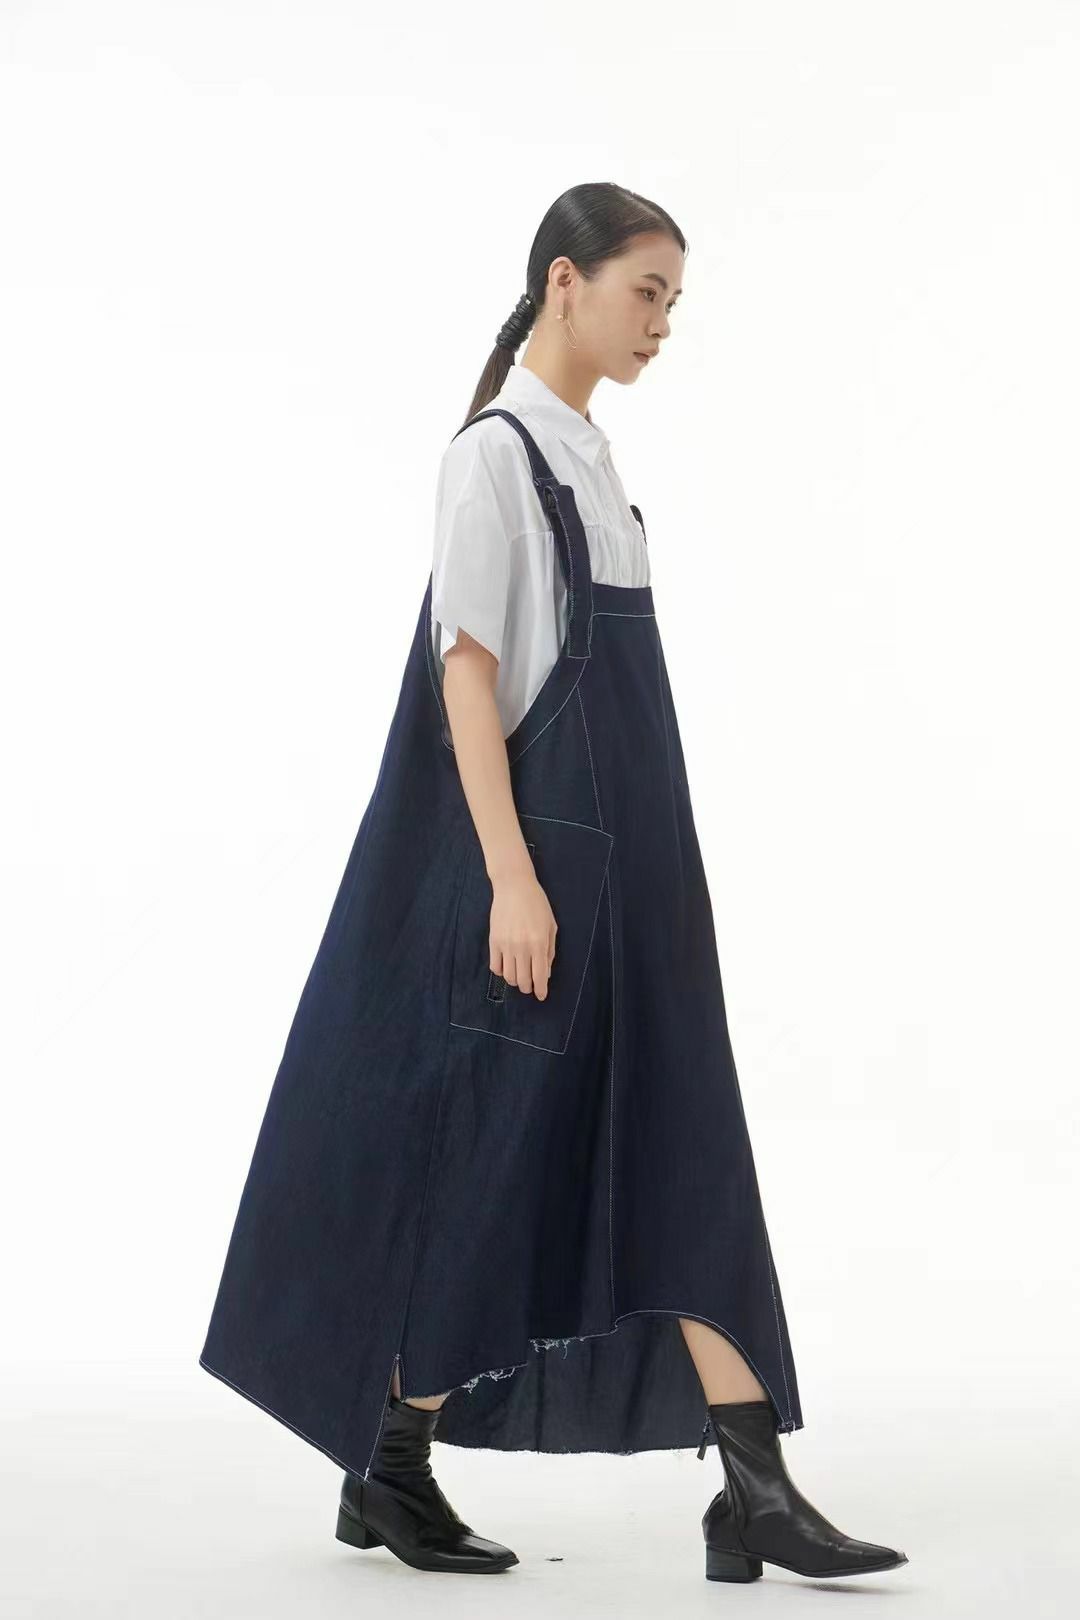 Japanese Dungaree Dress [#3212]